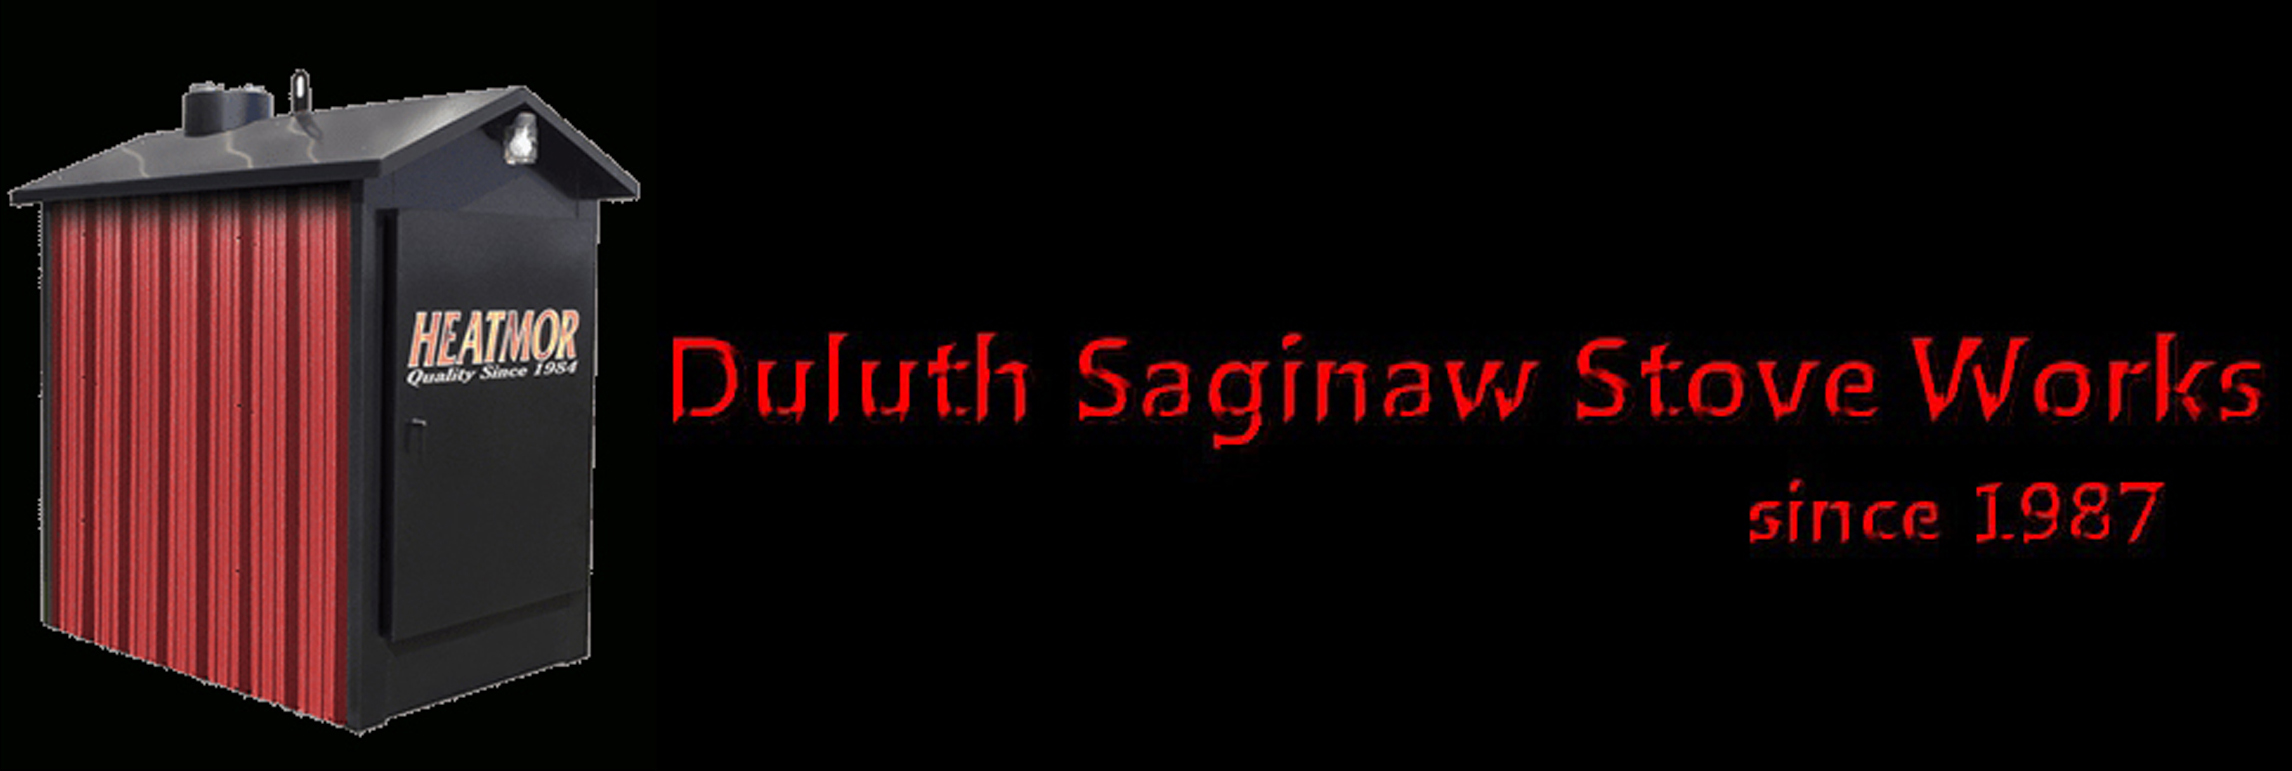 Duluth Saginaw Stove Works since 1987 Banner